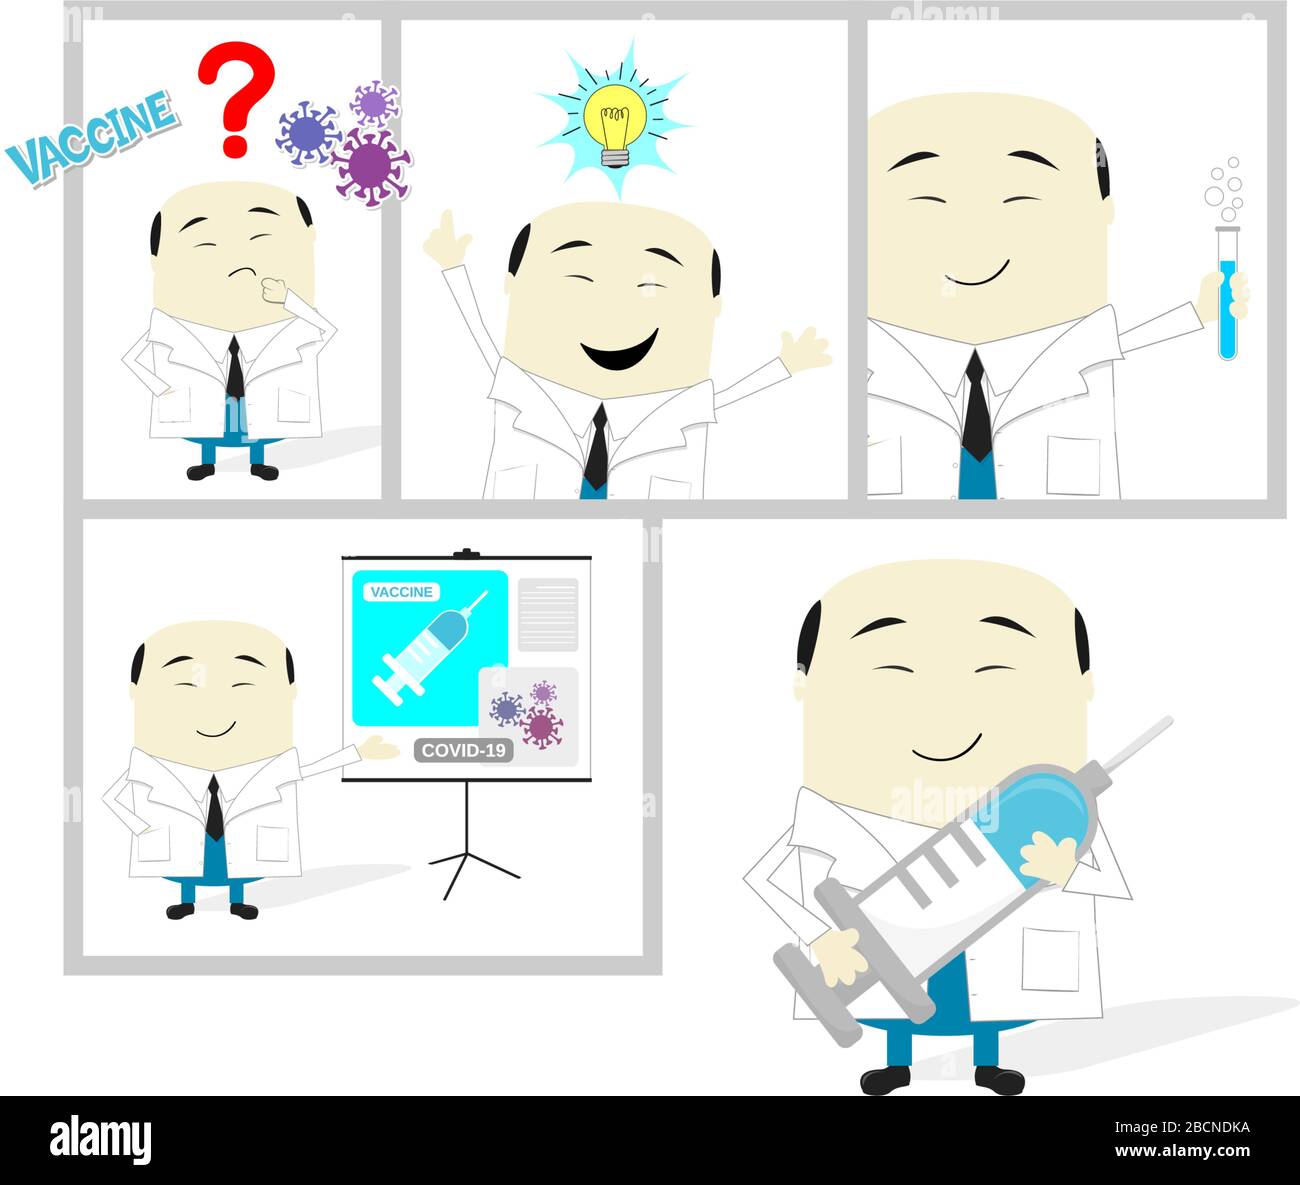 cartoon storyboard of asian scientist developing coronavirus vaccine. Isolated on white background Stock Vector